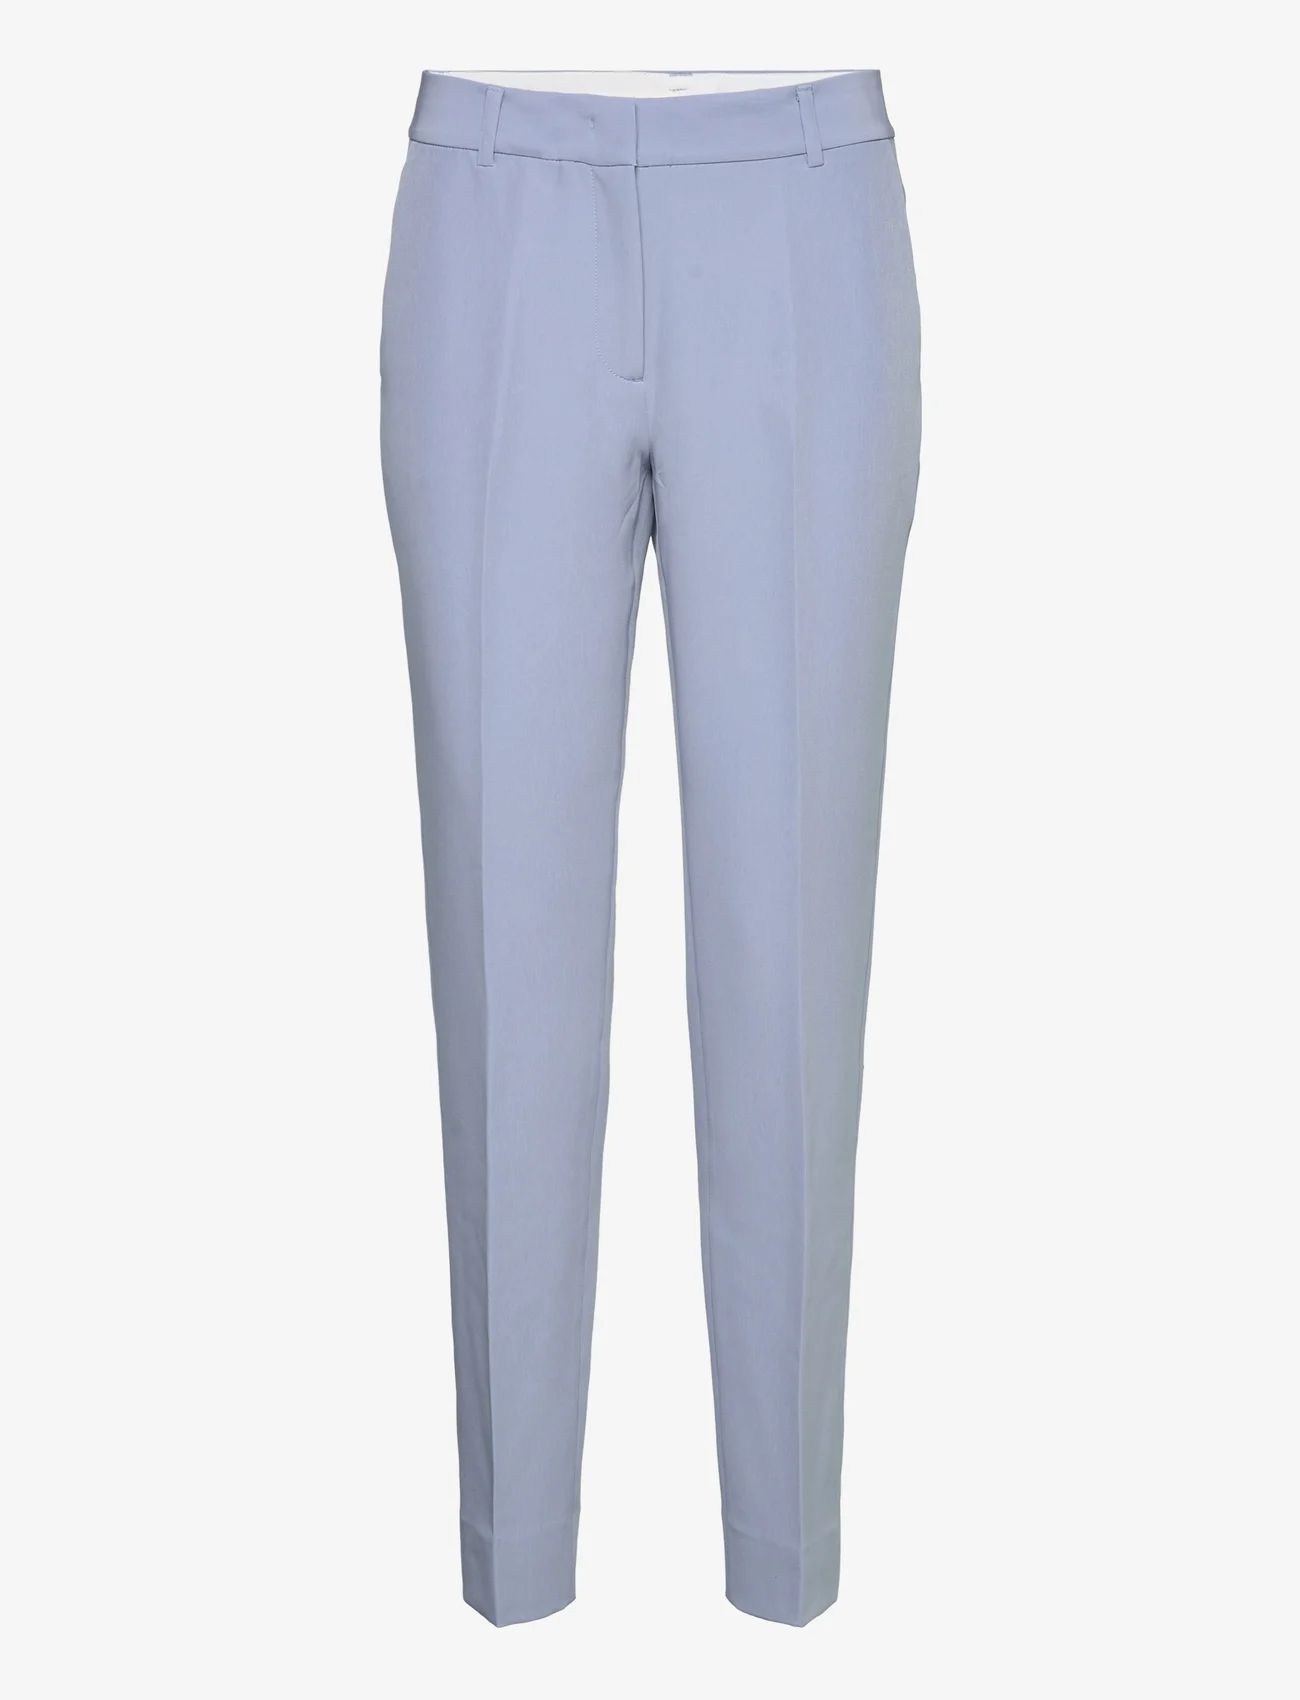 Bruuns Bazaar - RubysusBBLinea pants - kostymbyxor - ash blue - 0